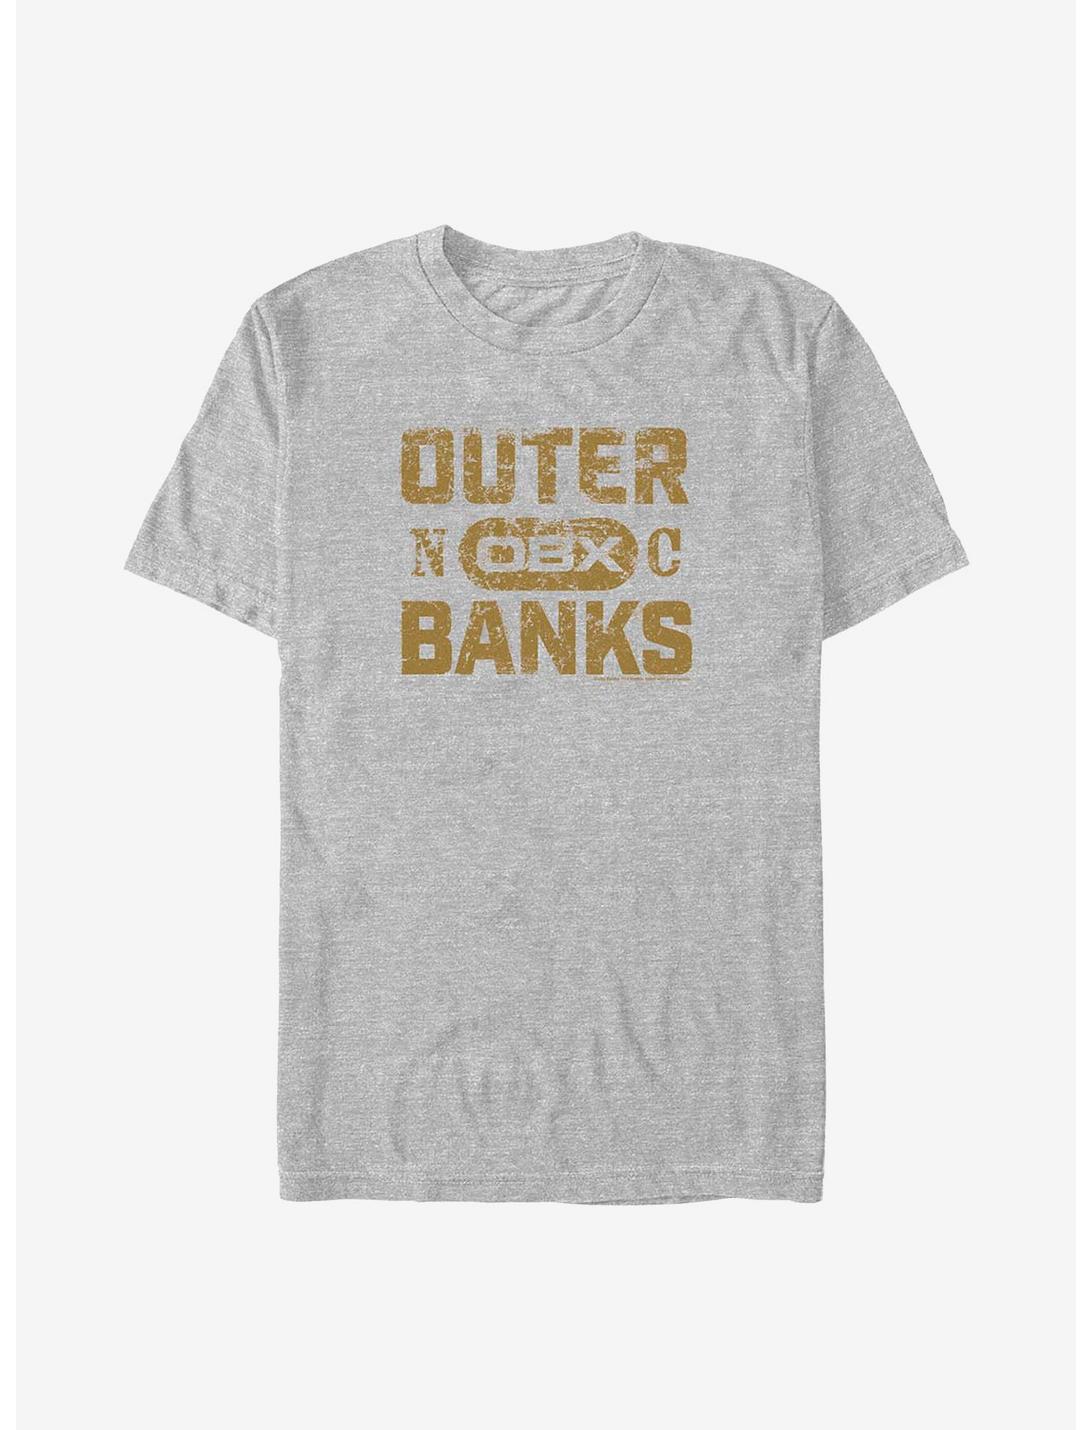 Outer Banks OBX T-Shirt, ATH HTR, hi-res